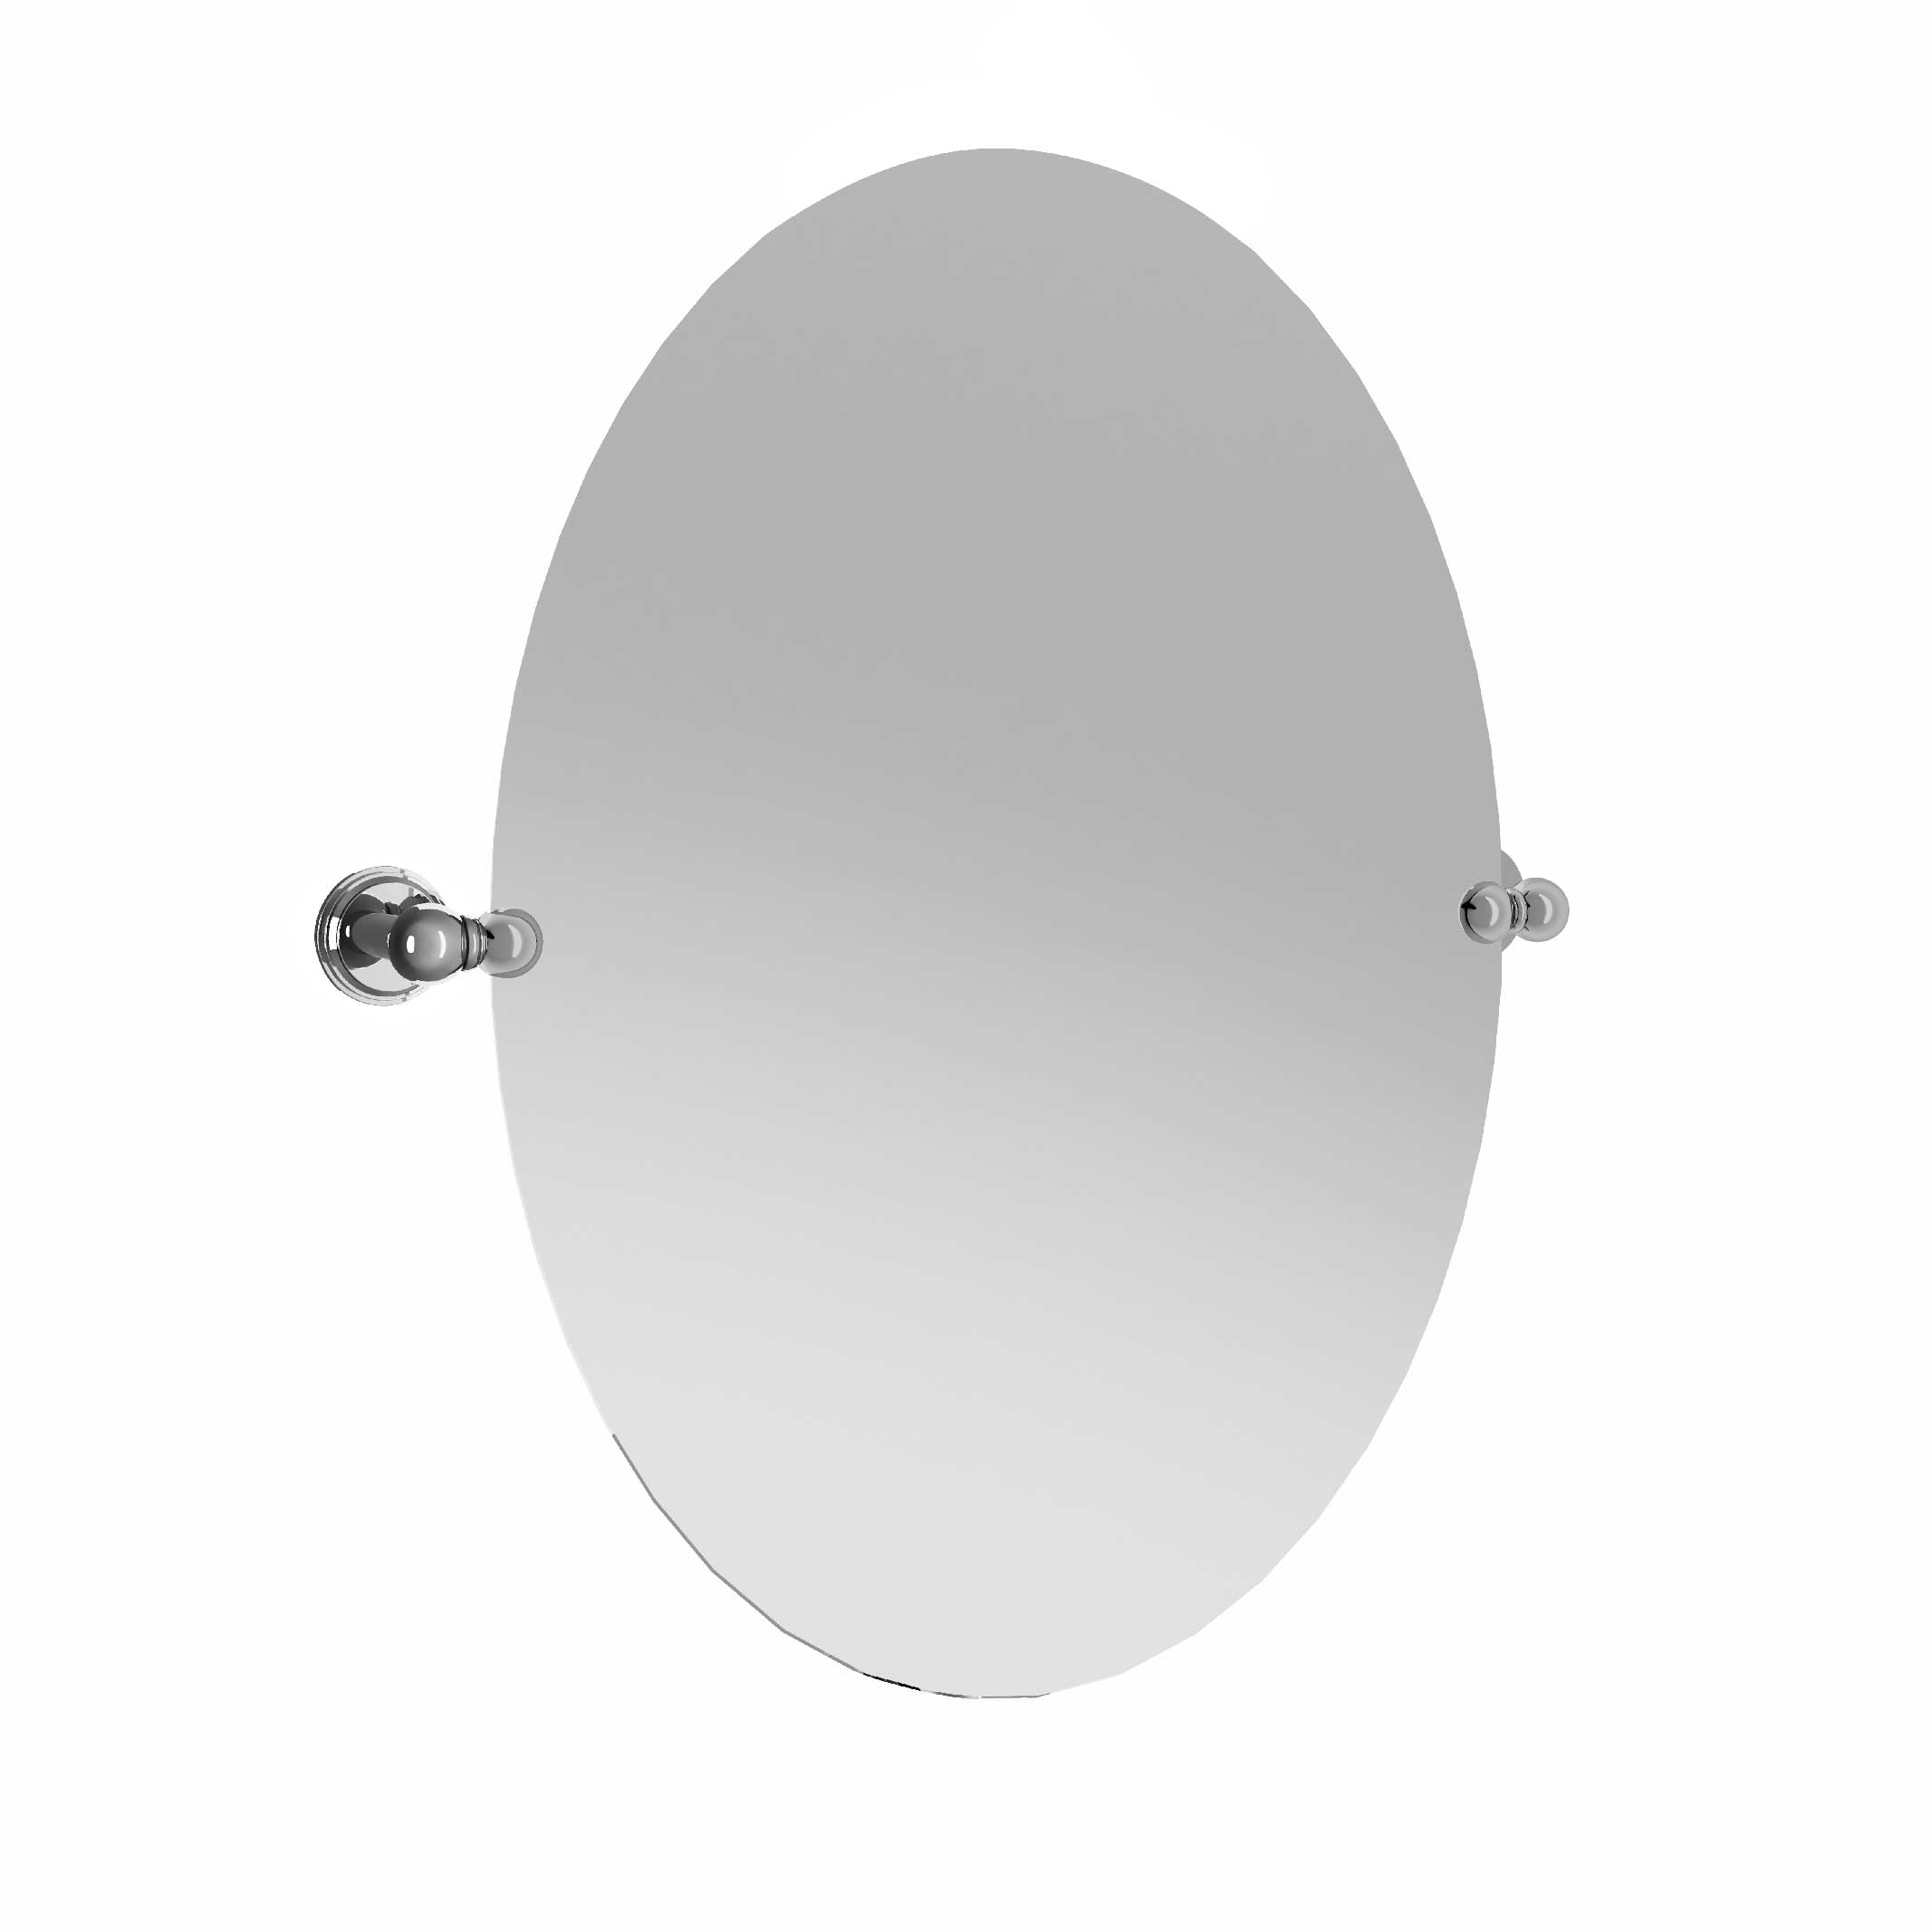 M40-537 Oval mirror